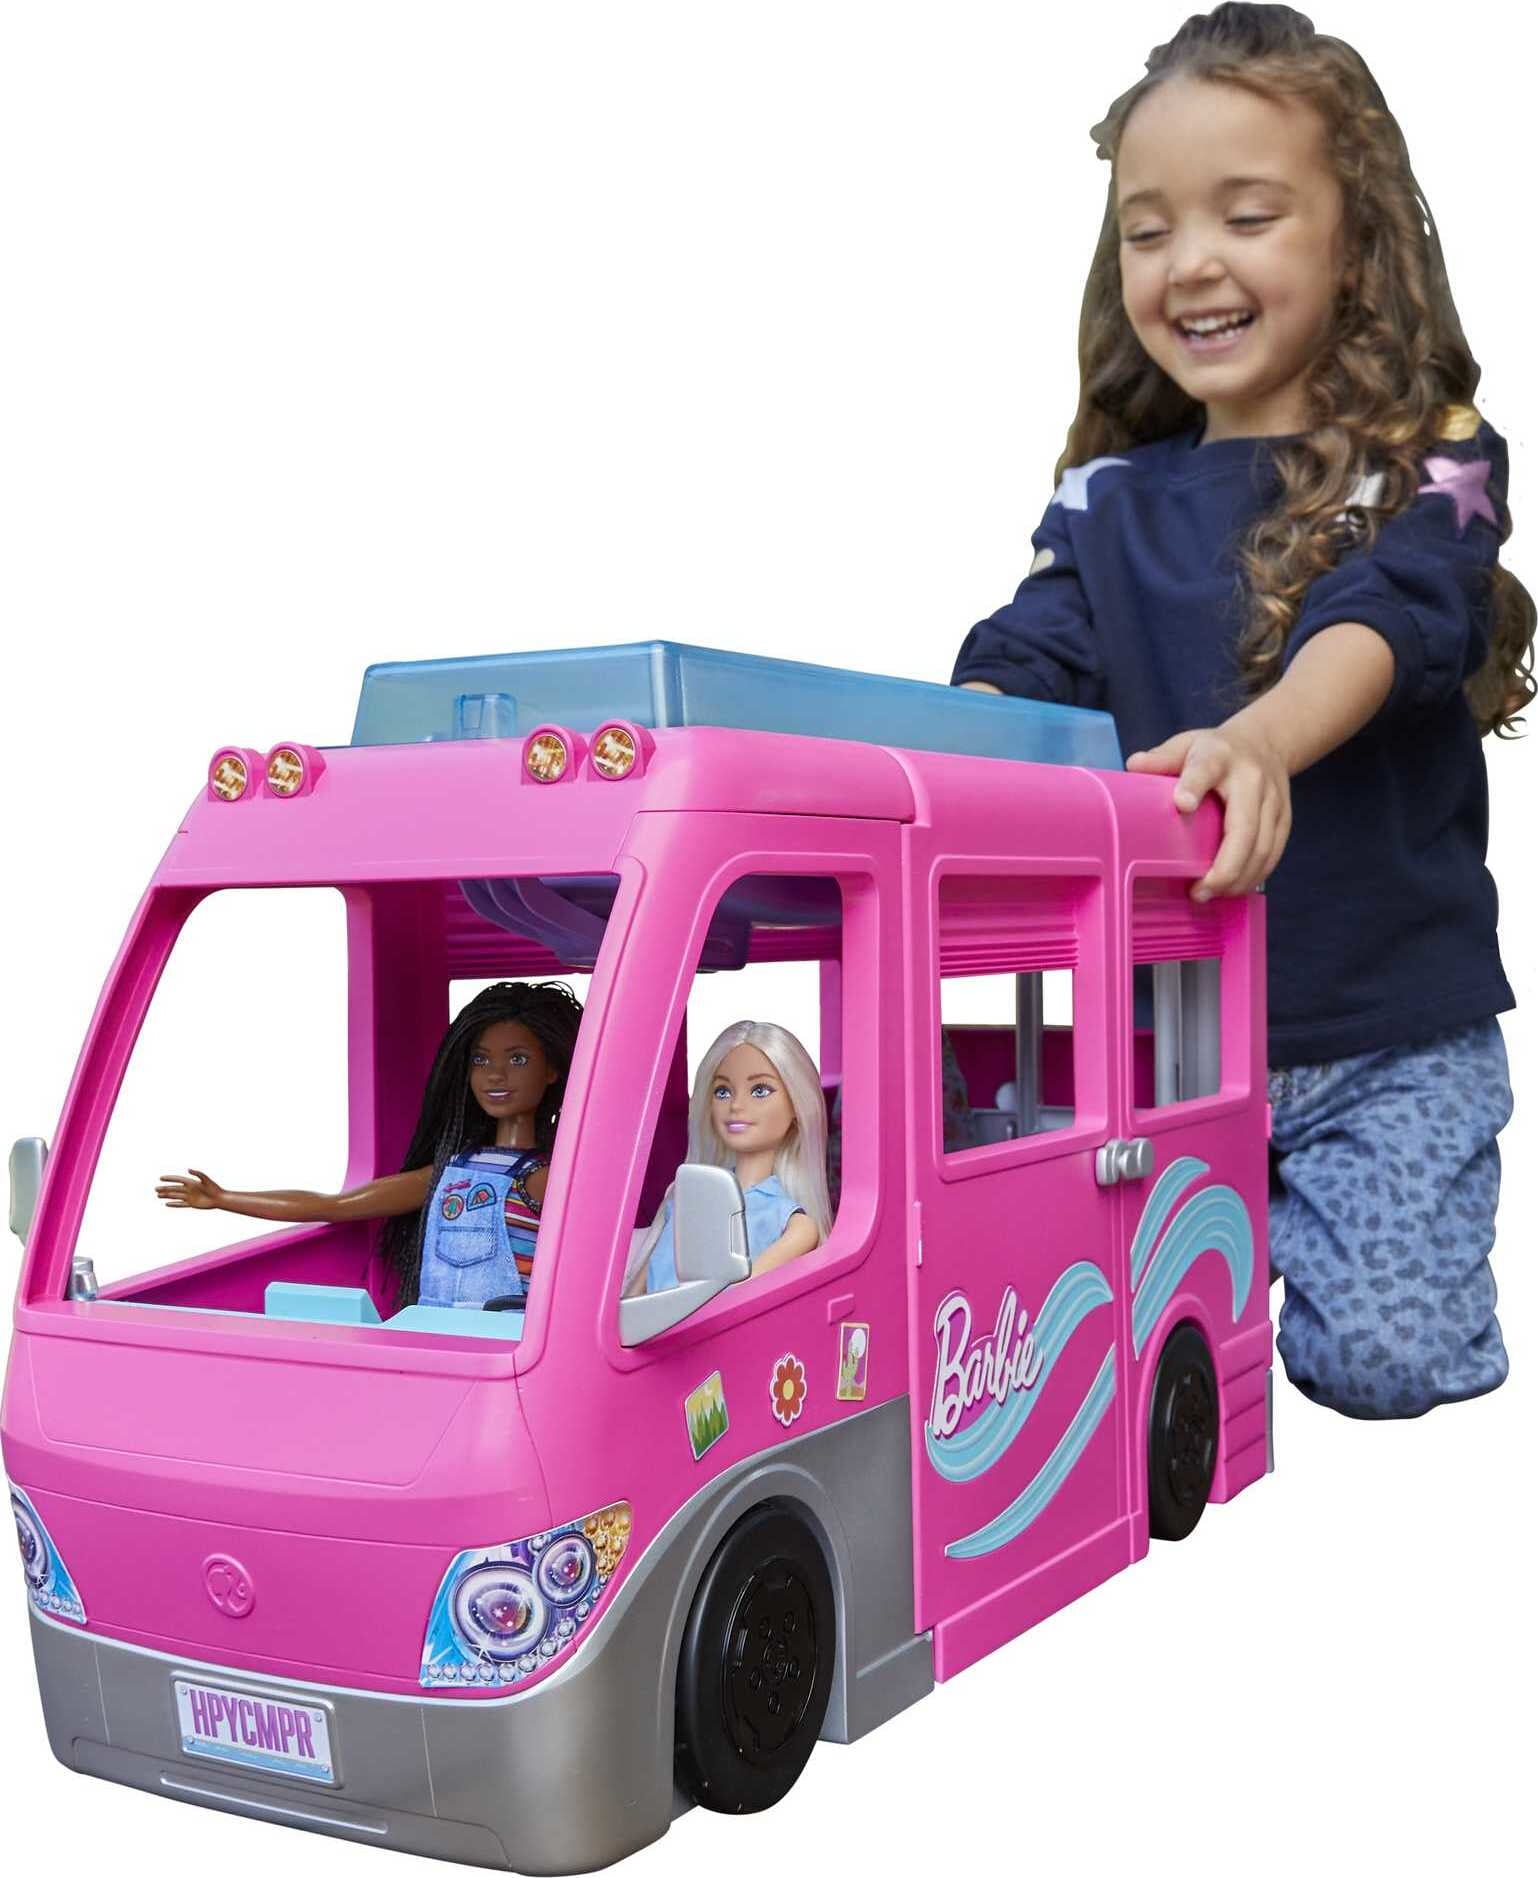 Mattel MTTHCD46 Barbie Dreamcamper Vehicle Playset